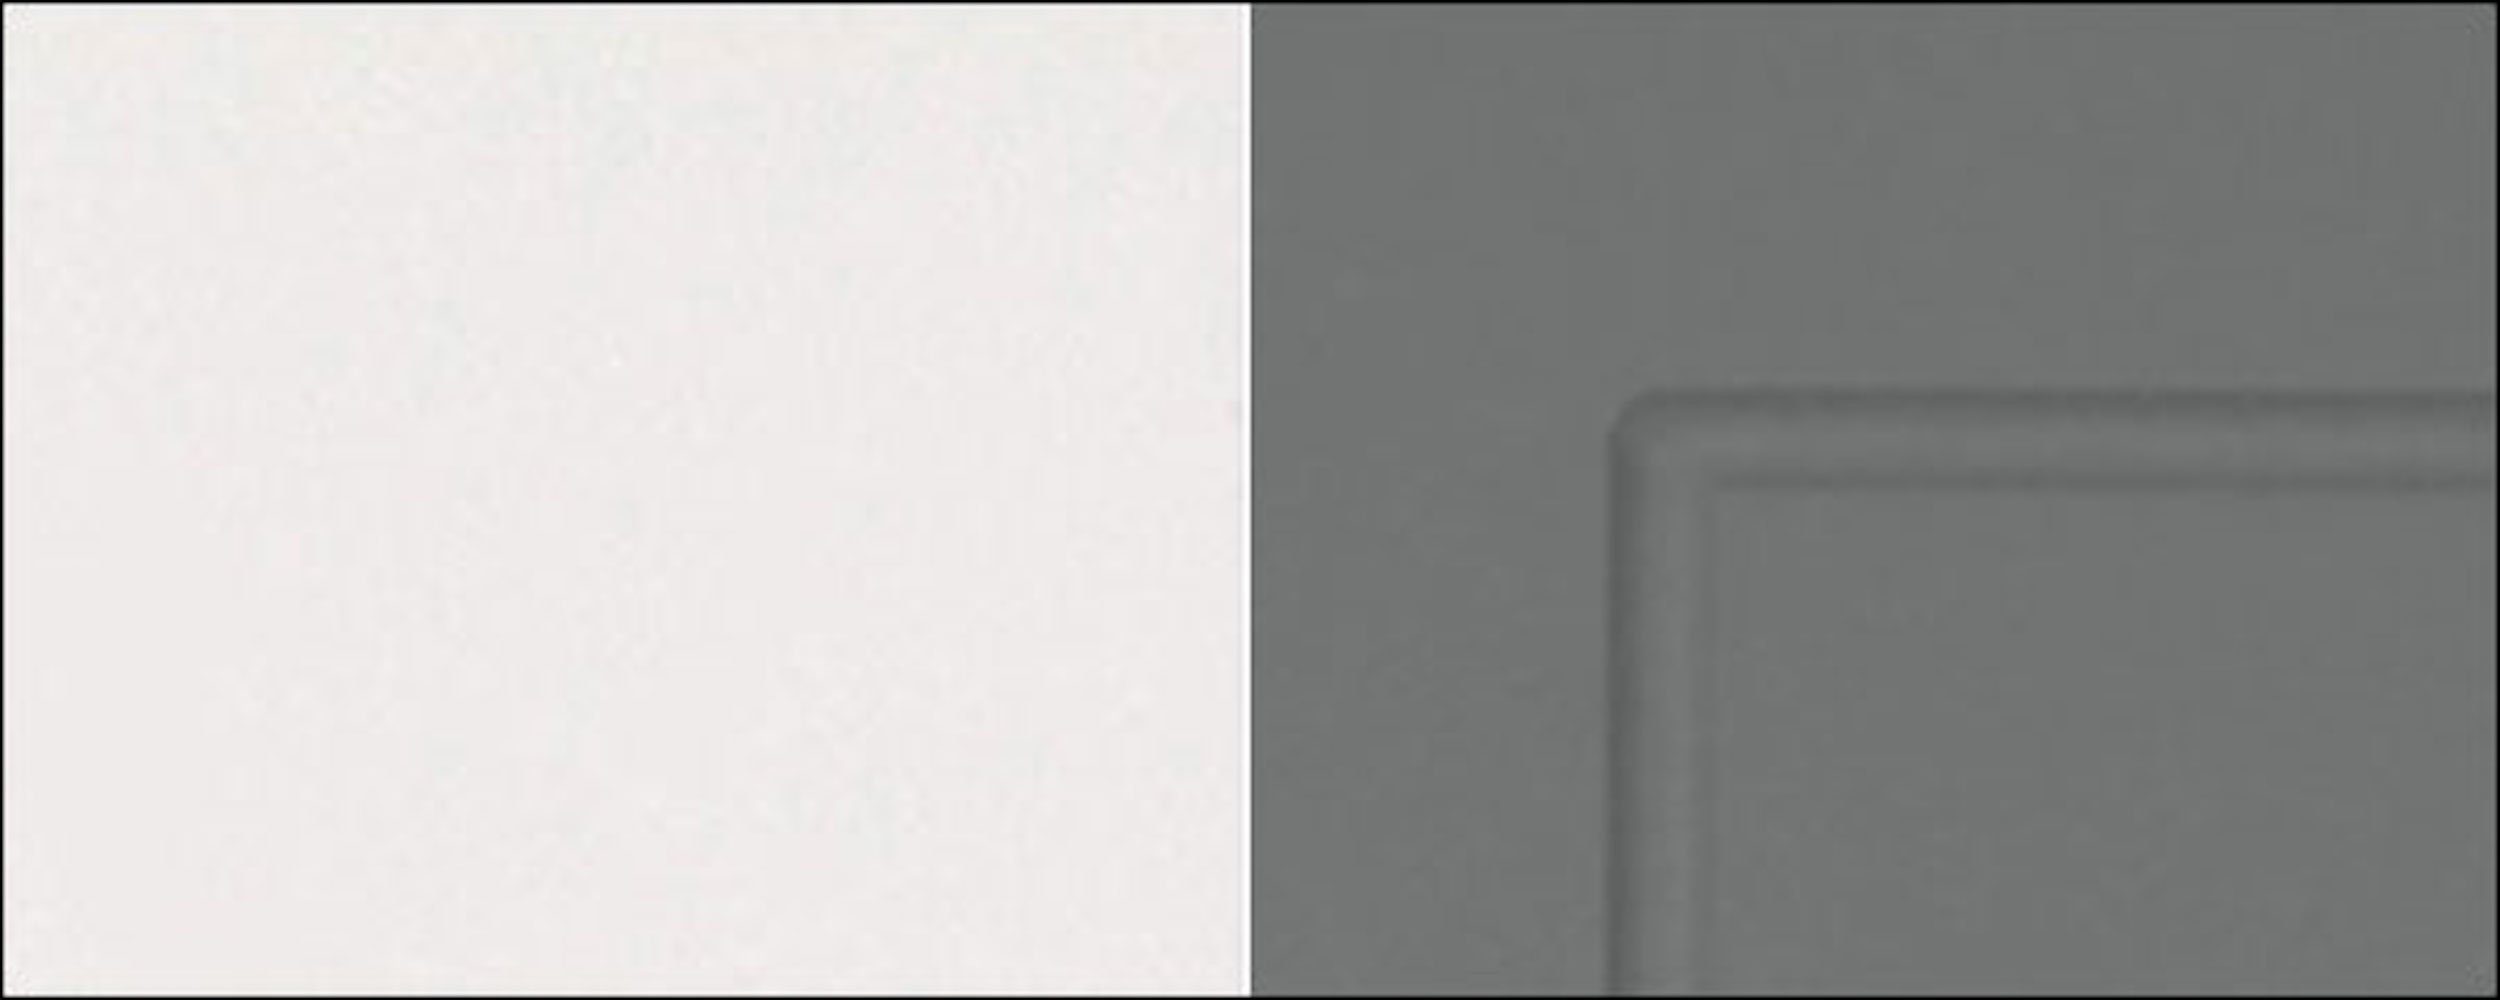 1-türig und wählbar Eckhängeschrank matt (Kvantum) 60cm Korpusfarbe grey Feldmann-Wohnen dust Front- Kvantum